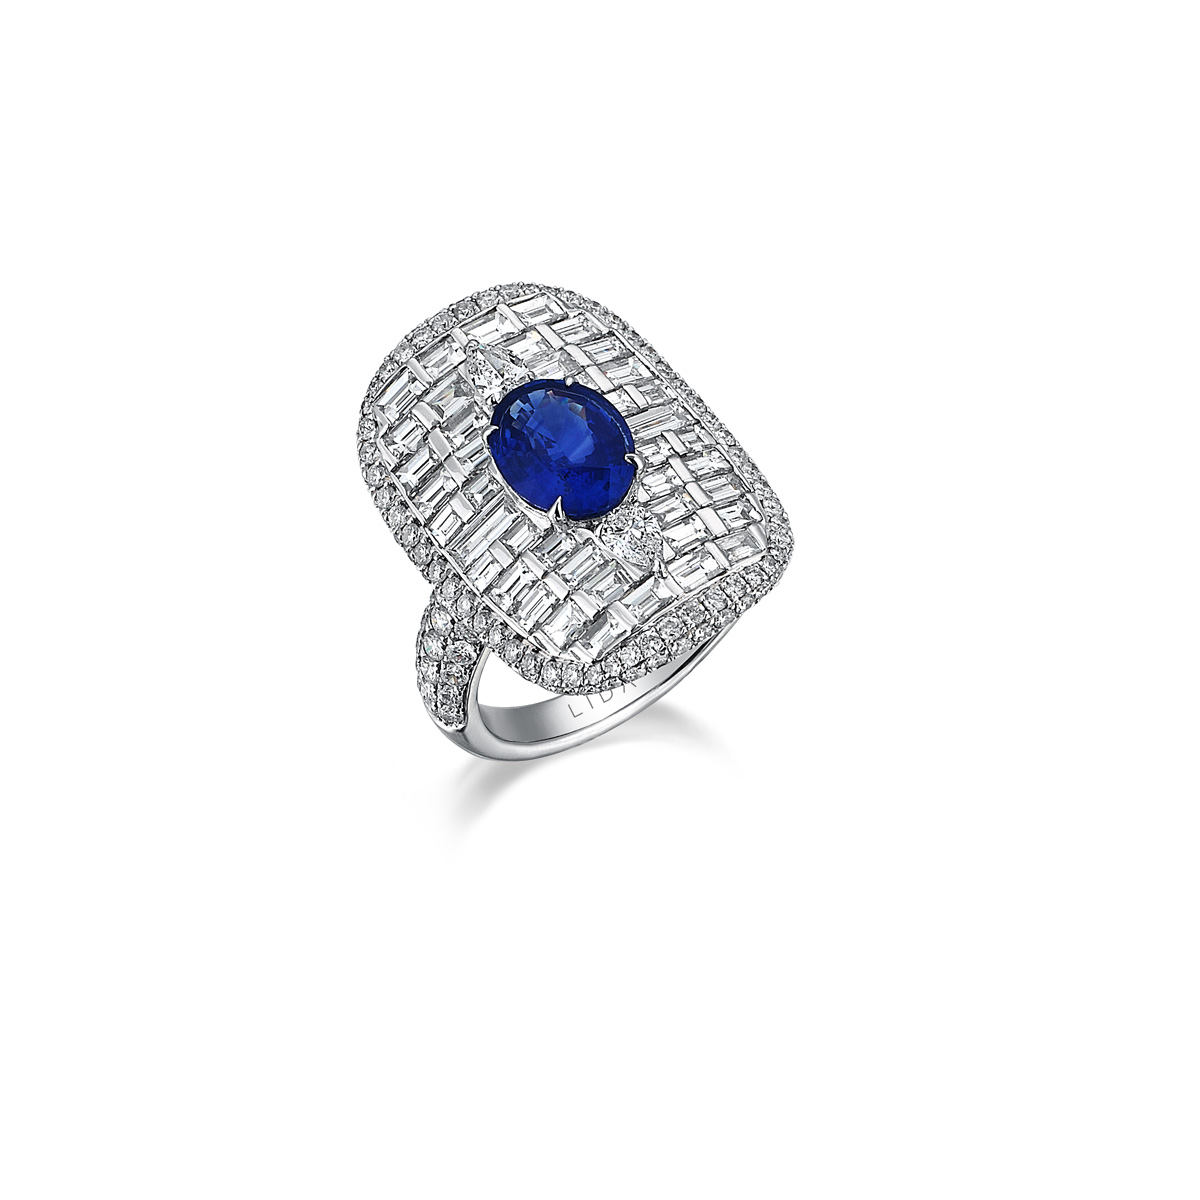 5.56 ct Diamond, Sapphire Ring